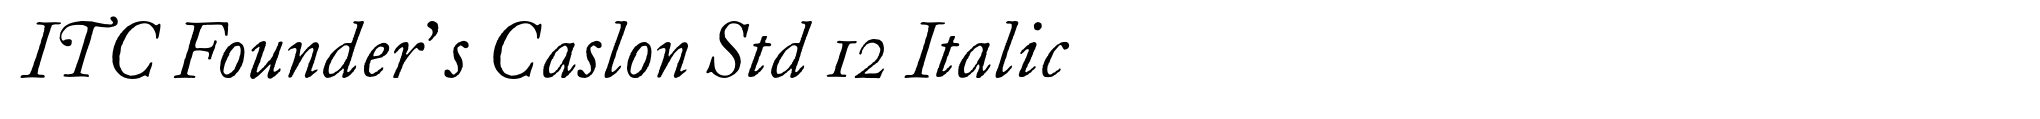 ITC Founder's Caslon Std 12 Italic image